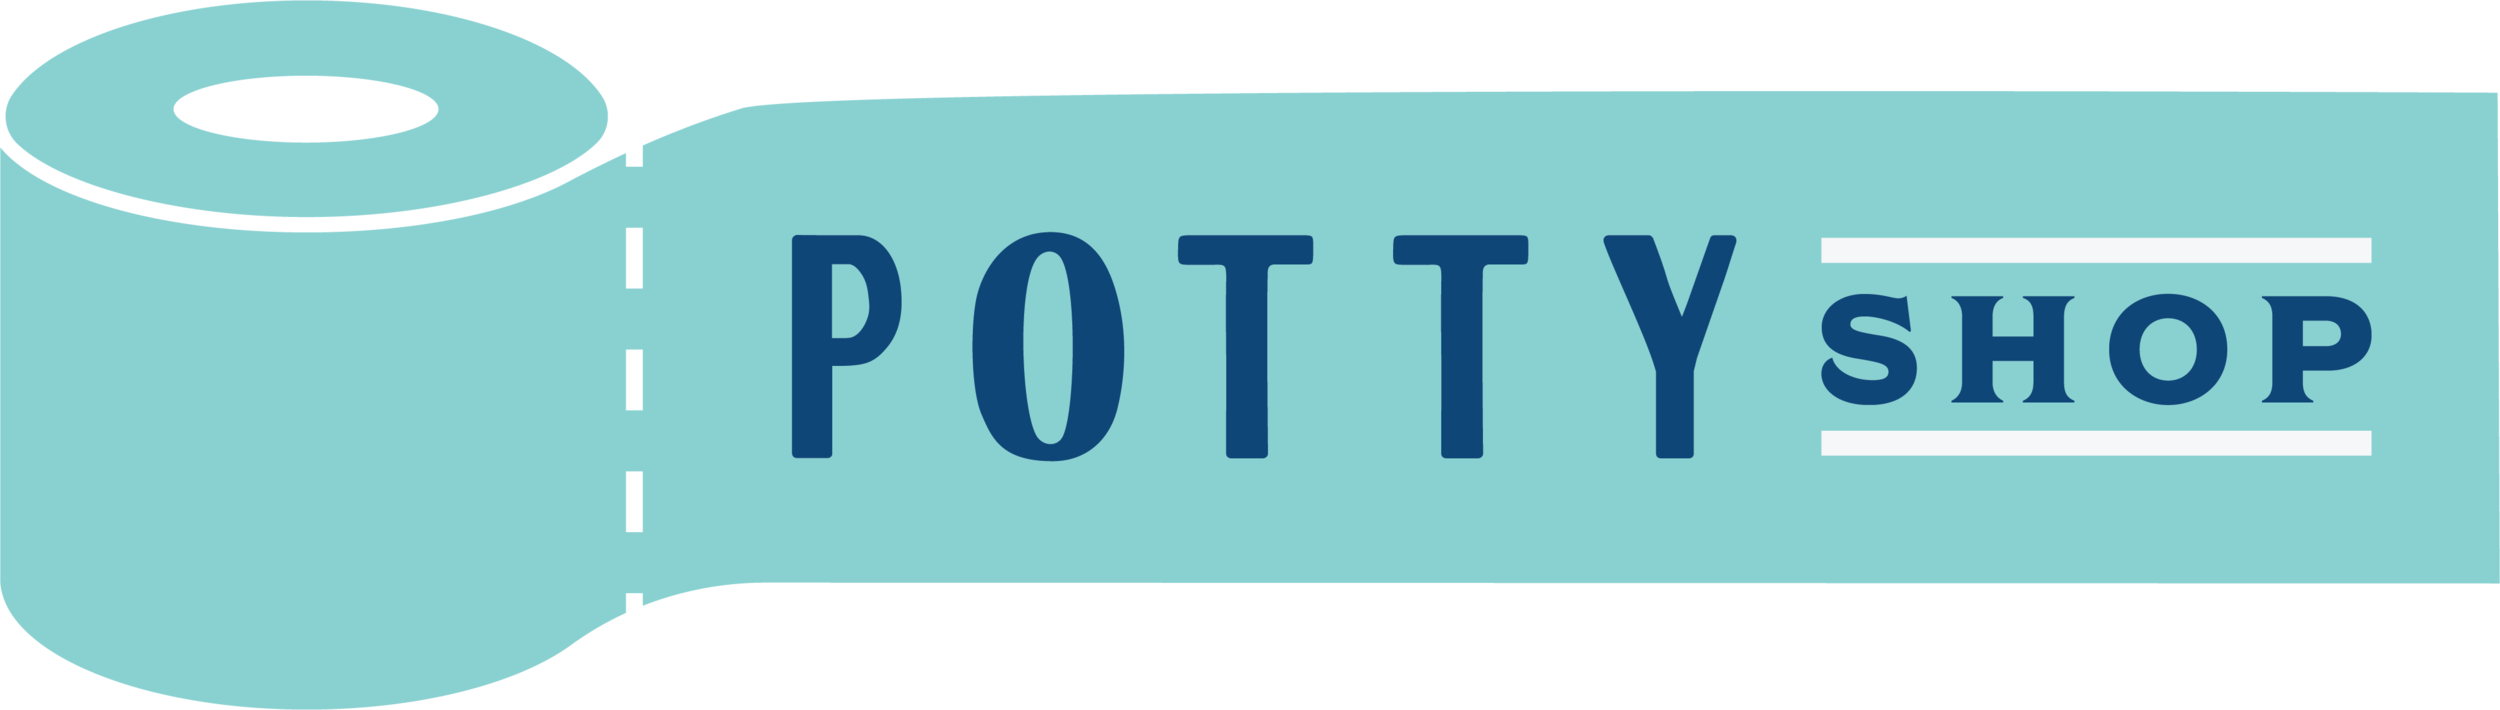 Potty Shop